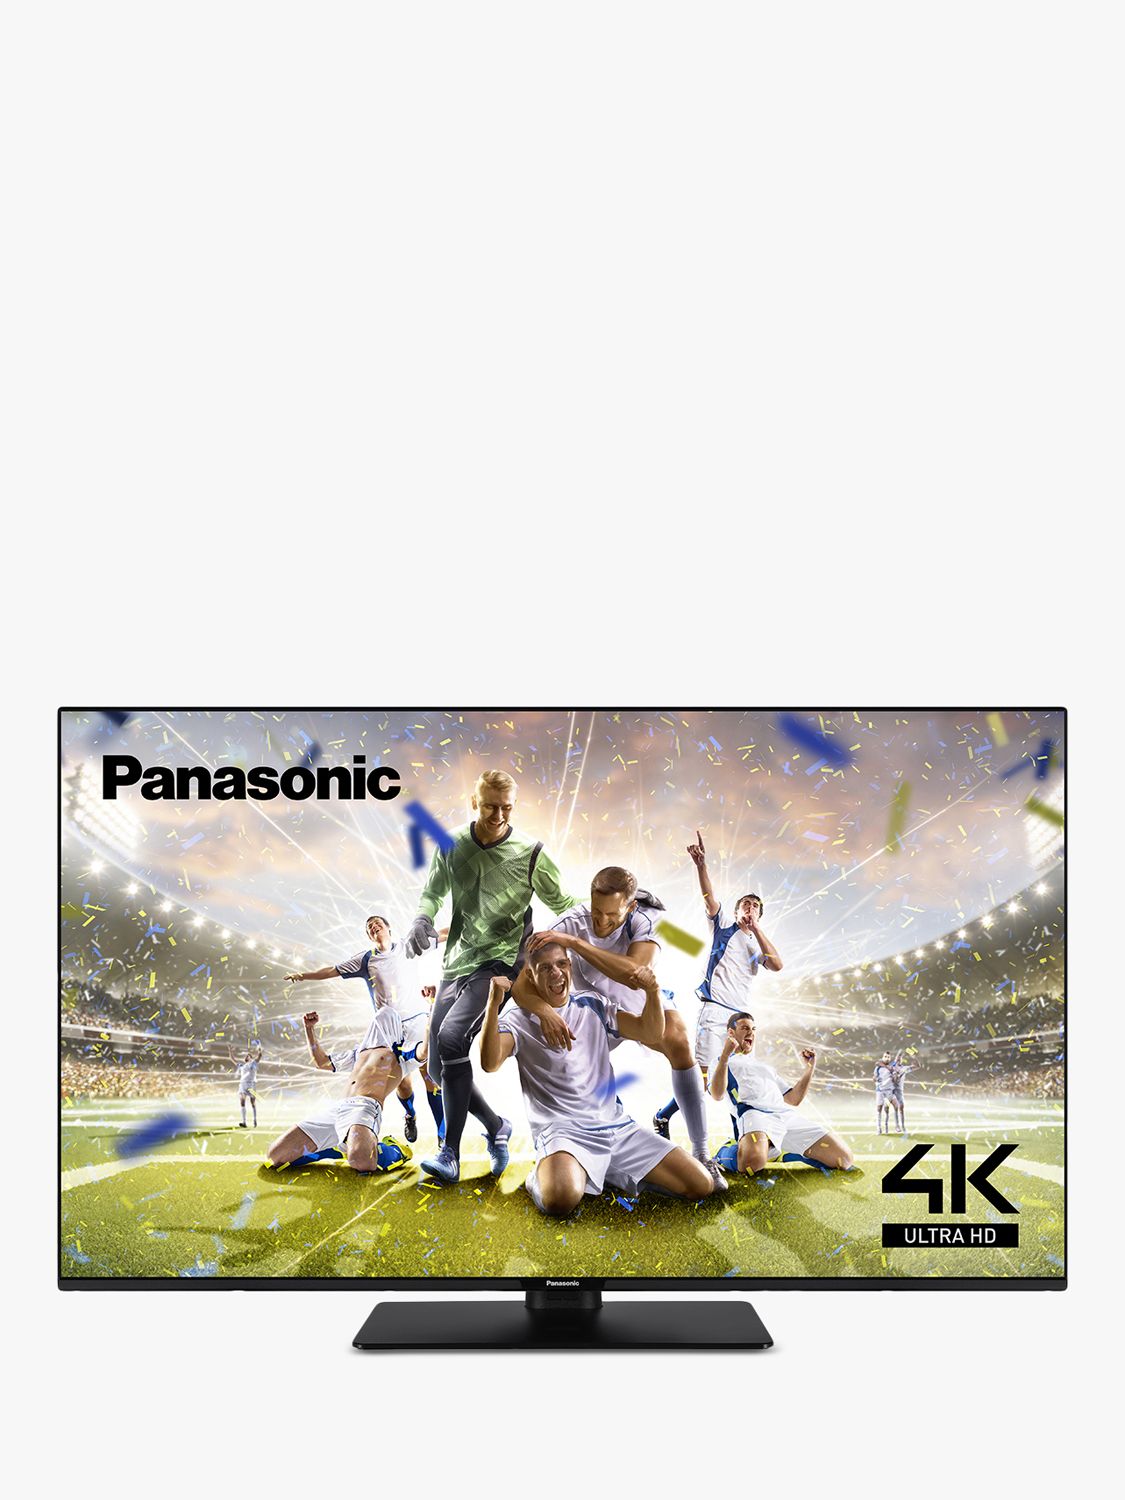 Disney+ On Panasonic TV ? 